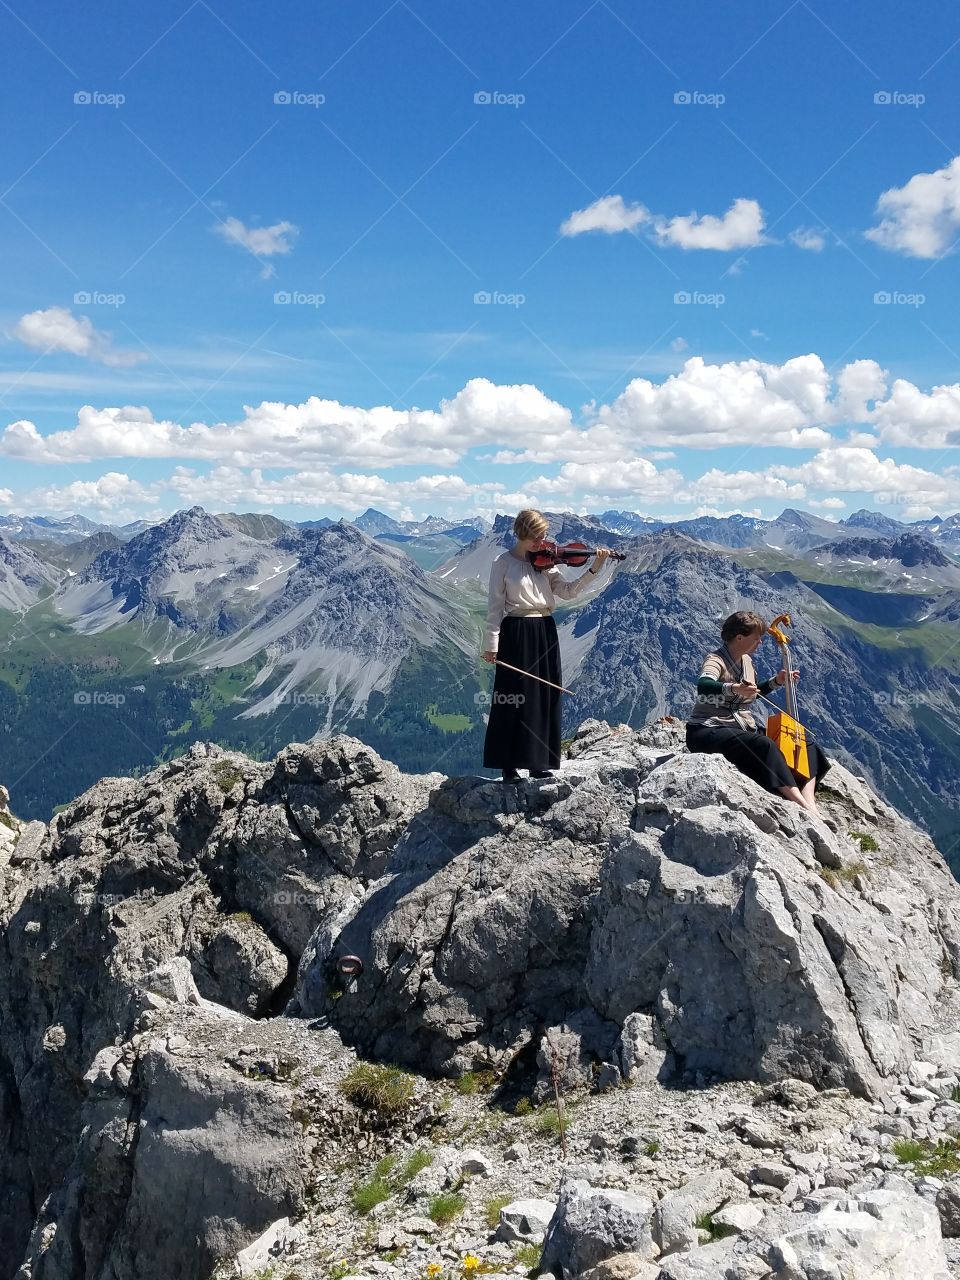 musicians on a mountaintop